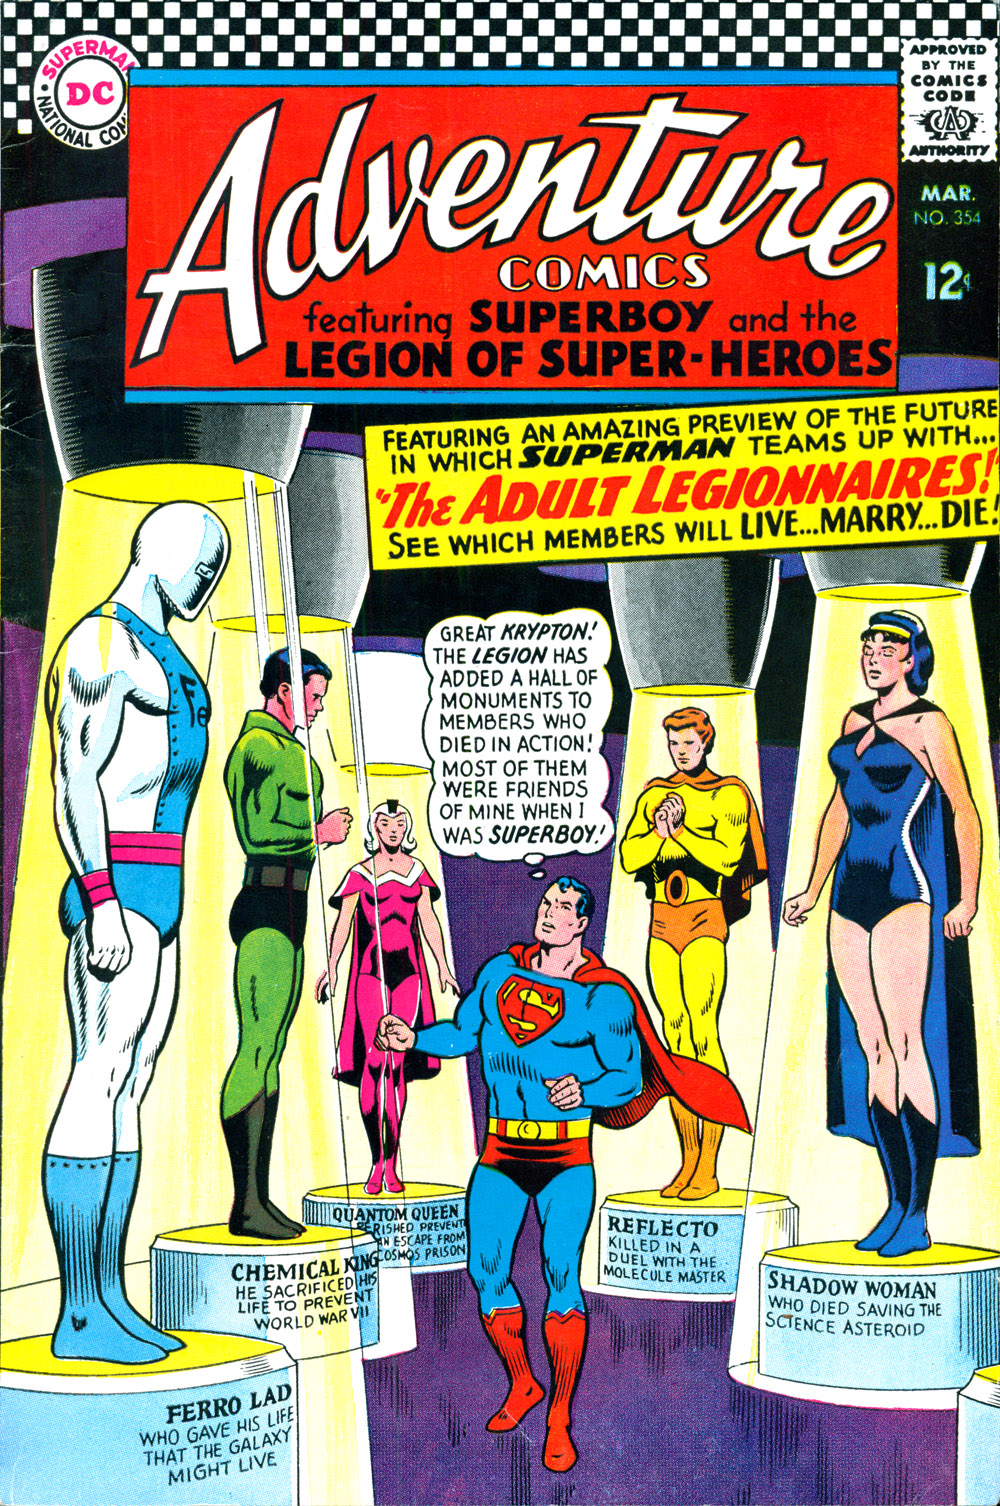 Ferro lad DC Comics. Ferro lad. The amazing Adventures of Comics. Tiki Comics. Superhero curtis